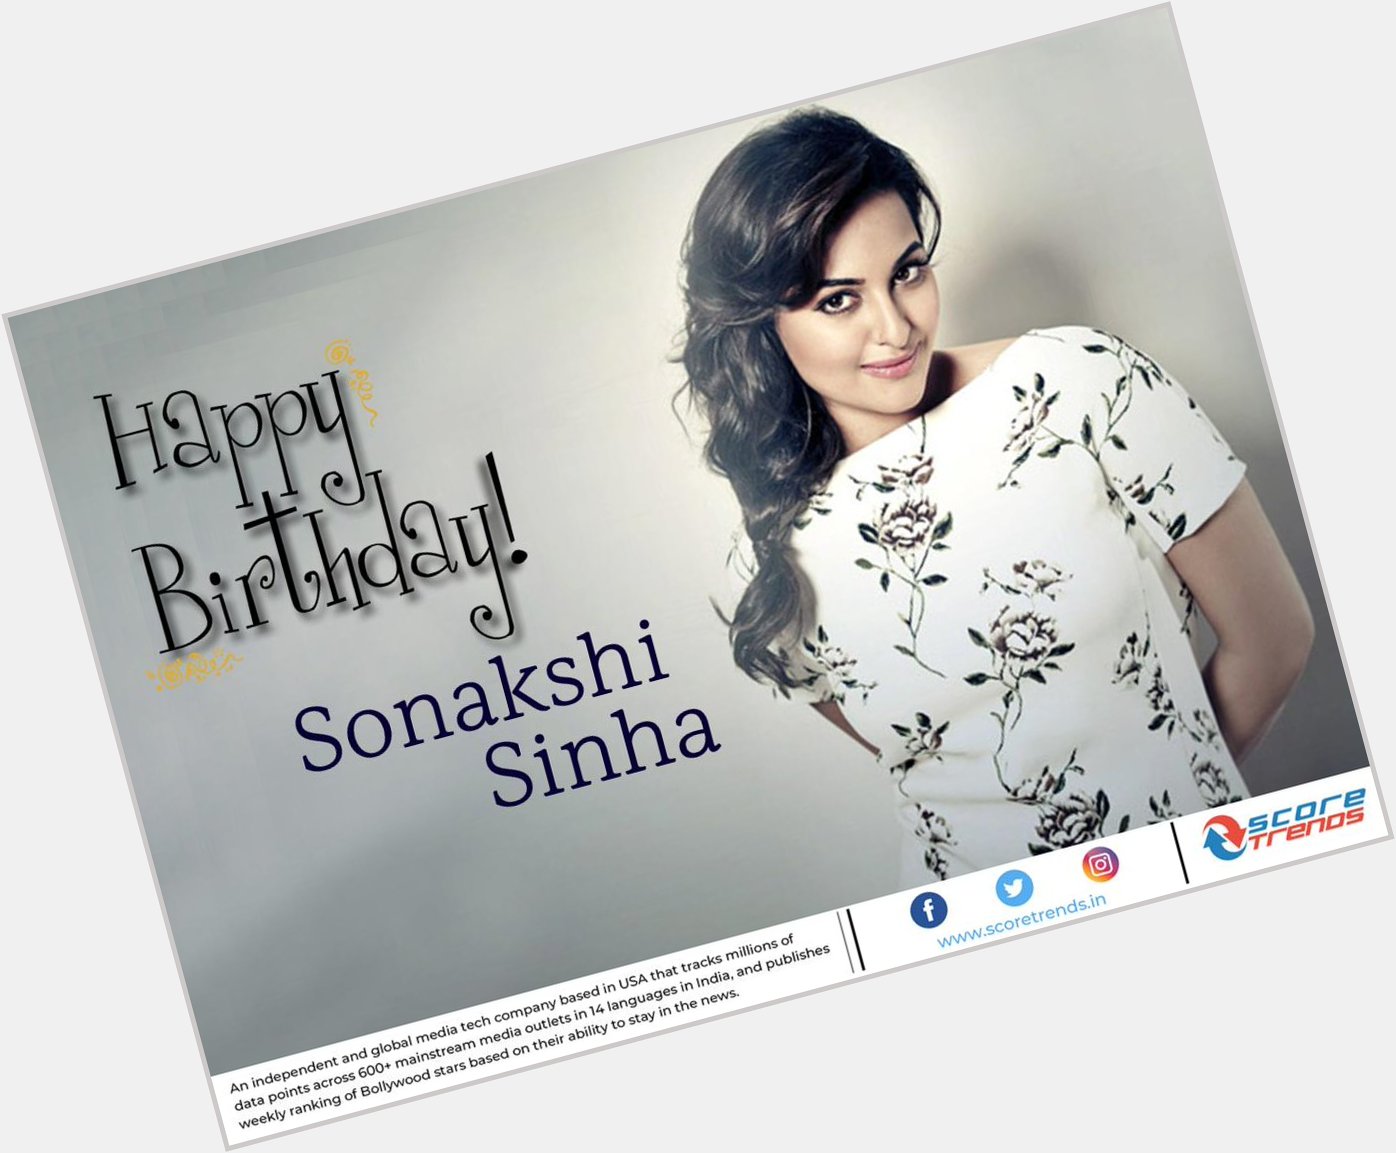 Score Trends wishes Sonakshi Sinha a Happy Birthday!! 